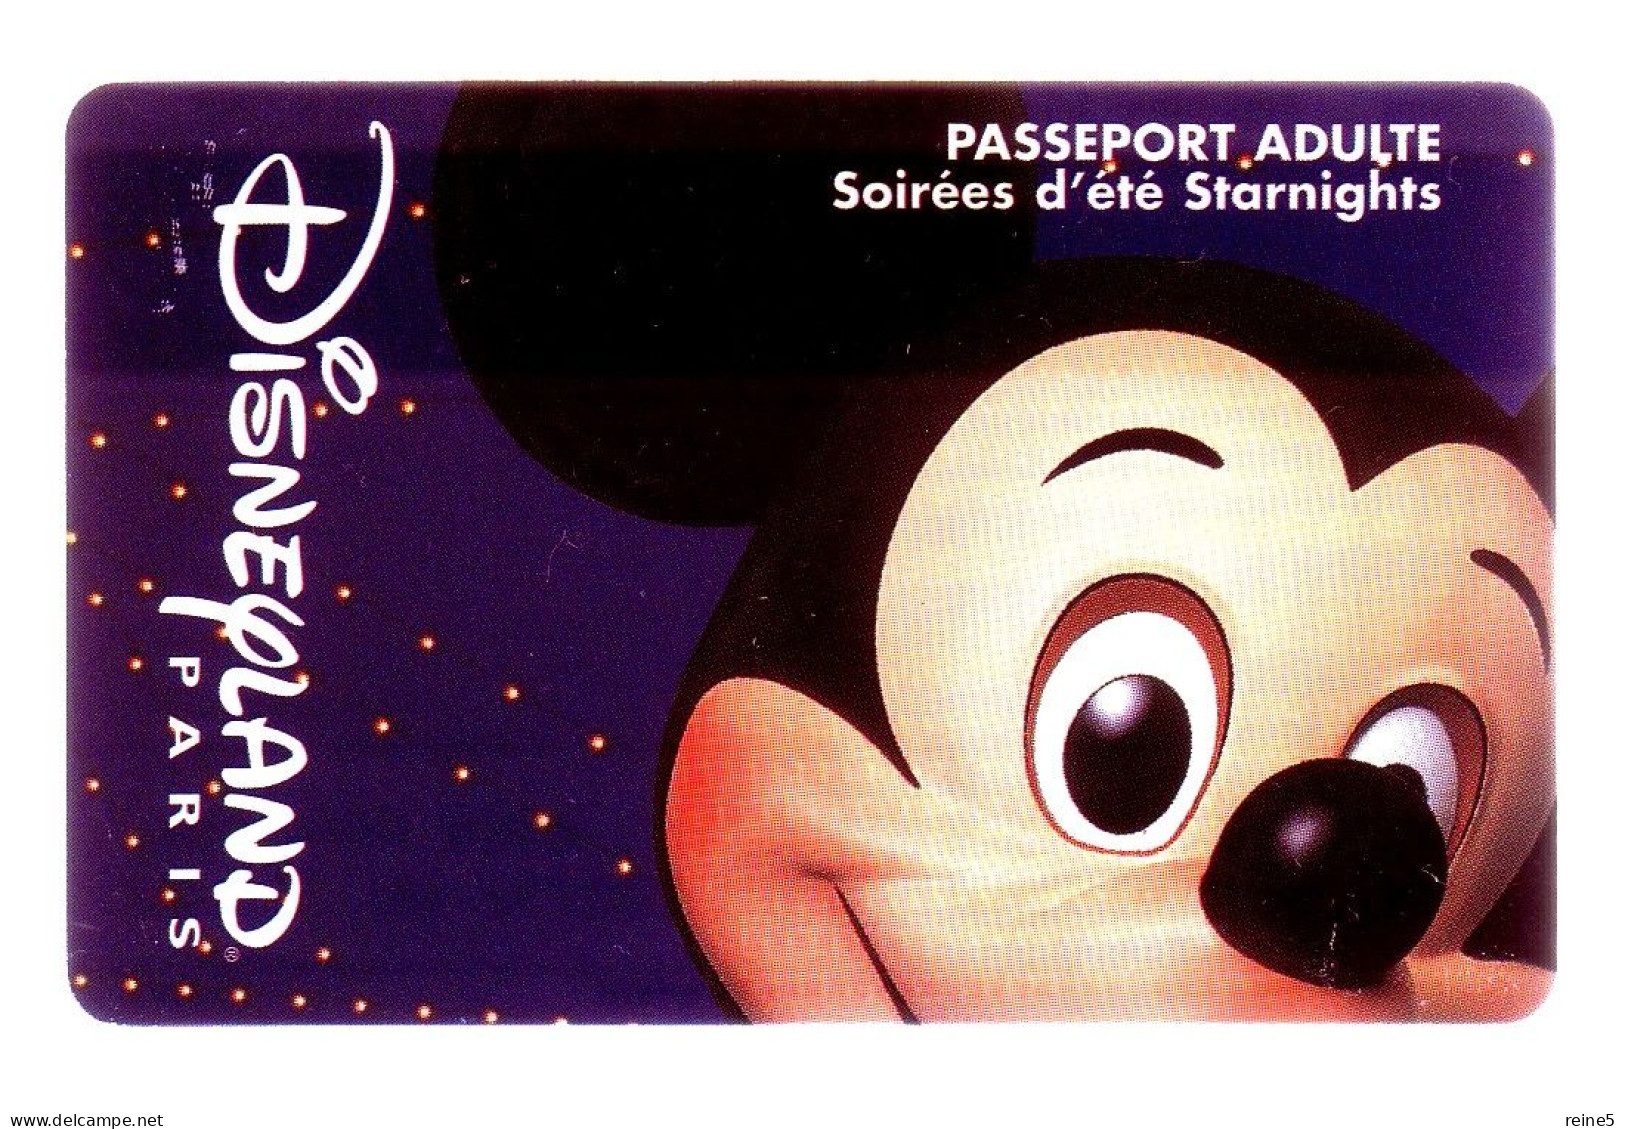 PASSEPORT ADULTE MICKEY SOIREES D'ETE STARNIGHTS DISNEYLAND PARIS -TRES BON ETAT -REF-PASS DISNEY-14 - Disney-Pässe